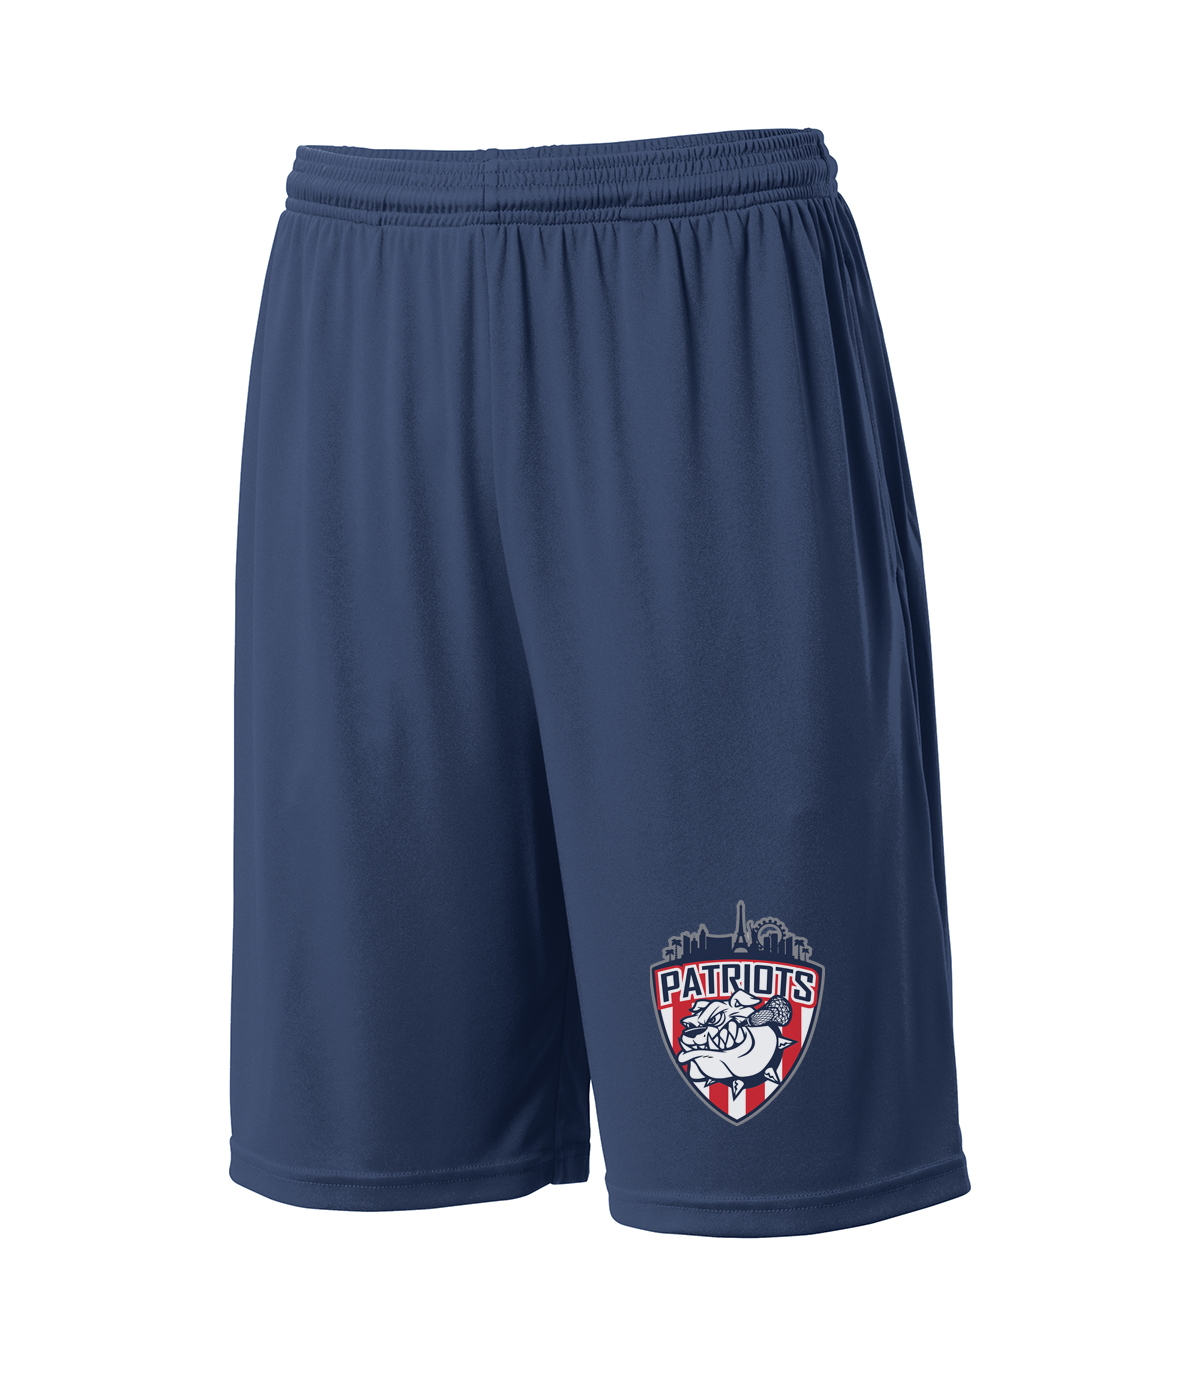 Las Vegas Patriots Shorts